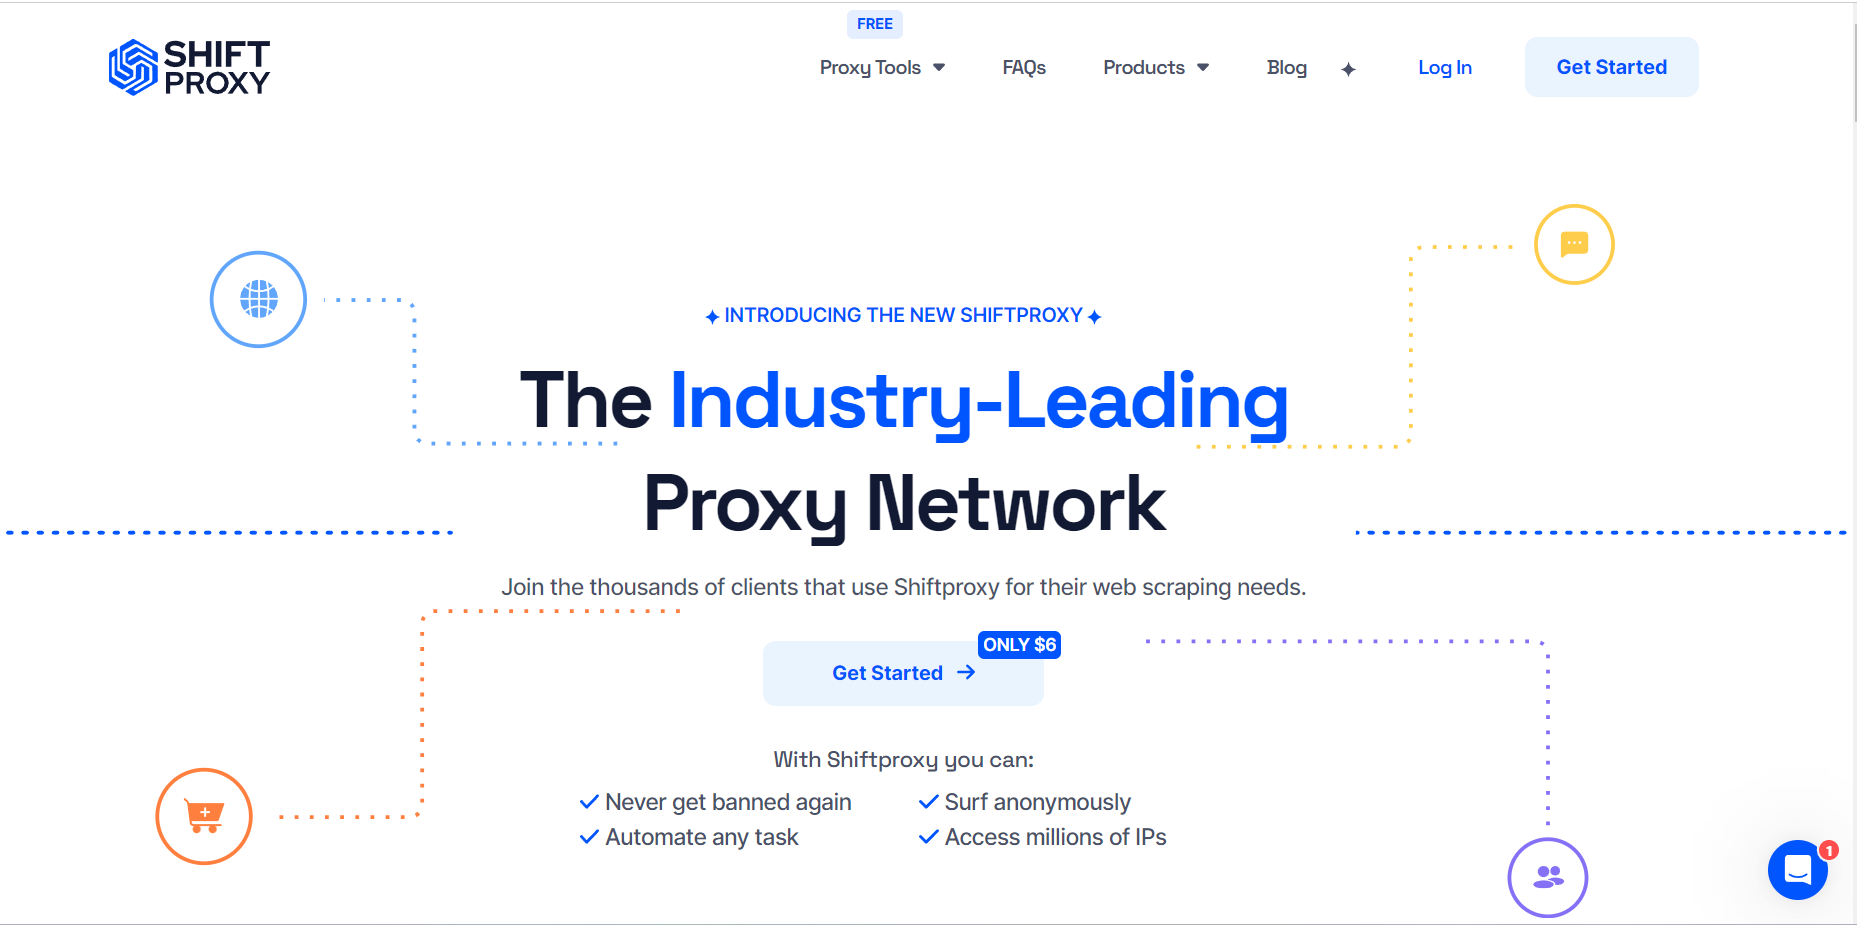 Shiftproxy Overview